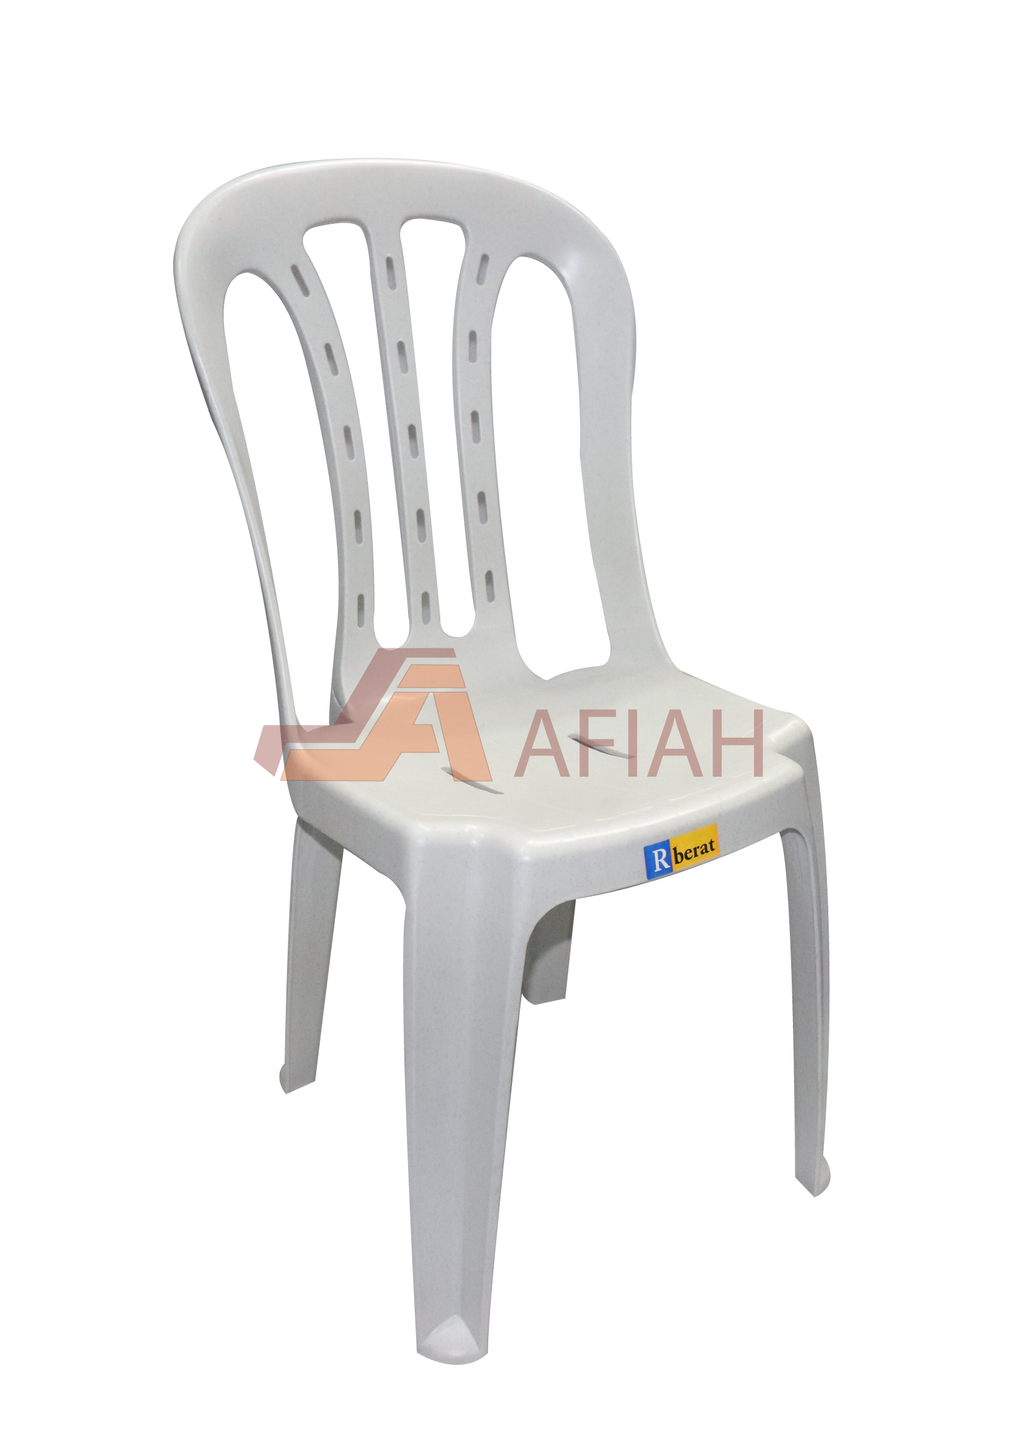 Plastic Chair - Afia Manufacturing Sdn Bhd, Afiah Trading Company